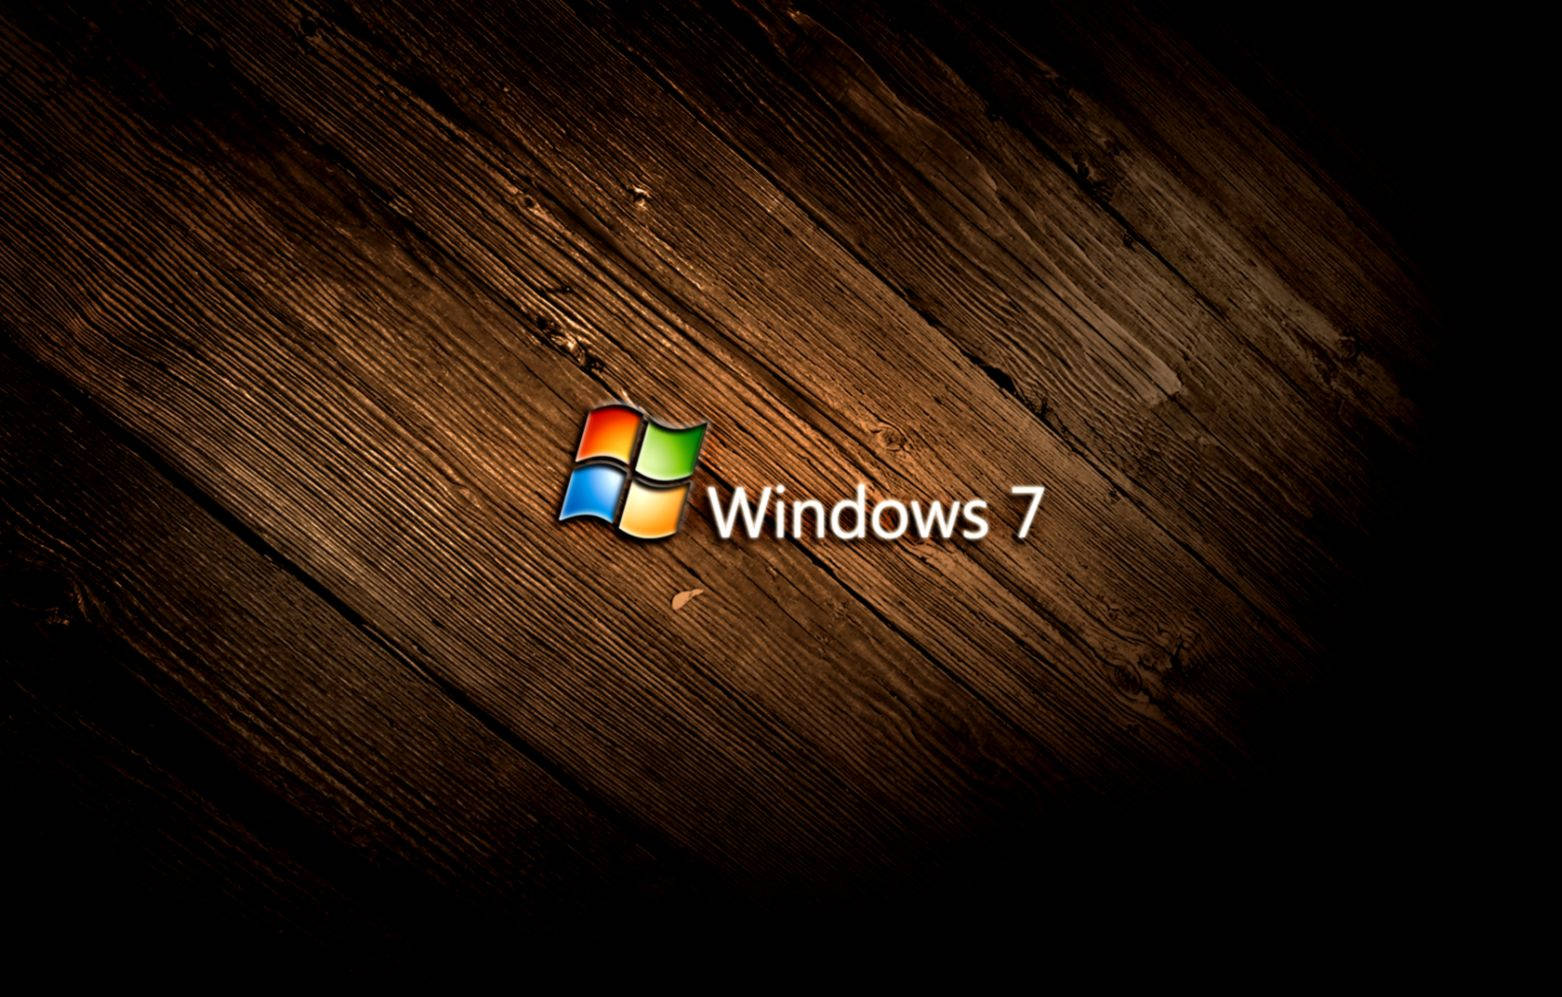 Free Windows 7 Wallpaper Downloads, [100+] Windows 7 Wallpapers for FREE |  